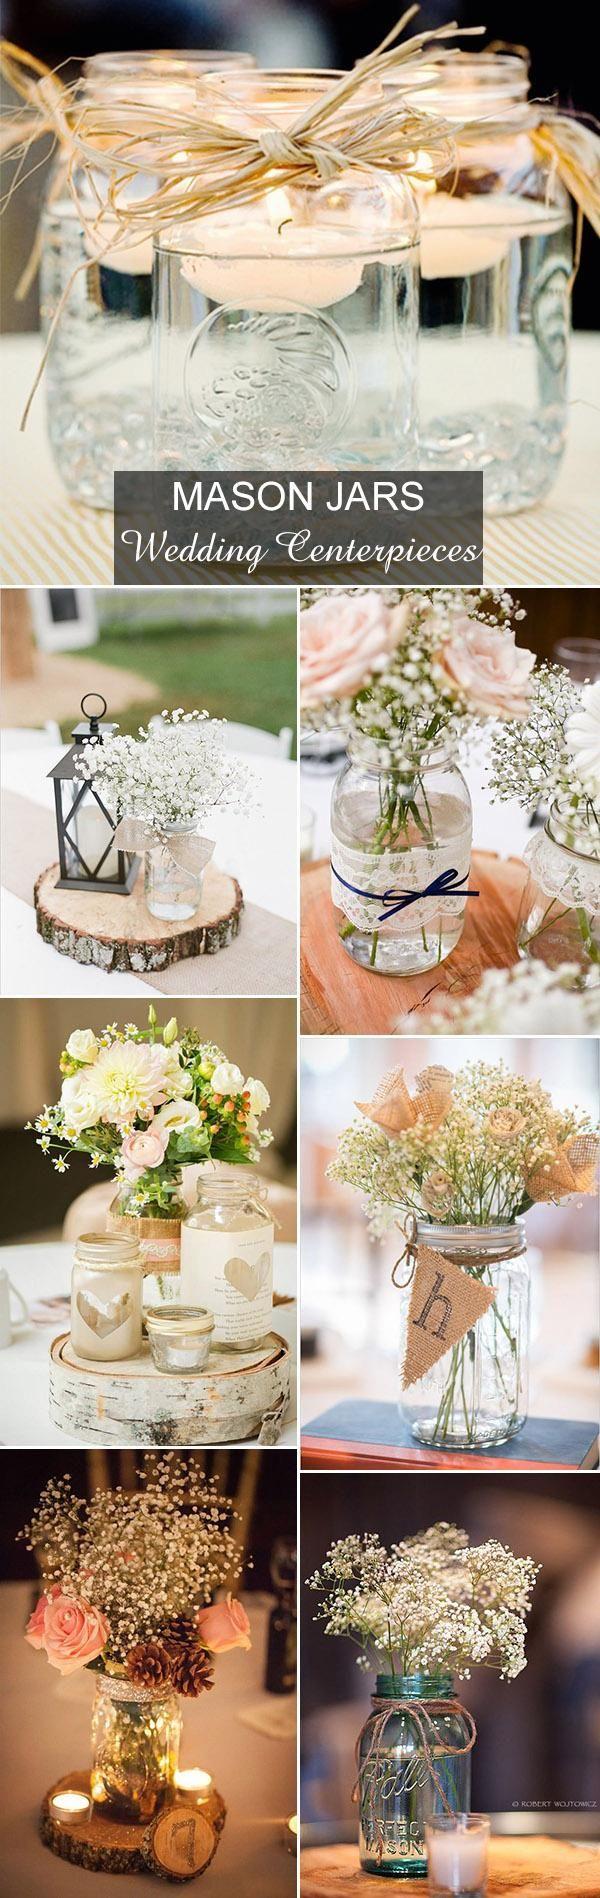 Hochzeit - Country Rustic Mason Jars Inspired Wedding Centerpieces Ideas